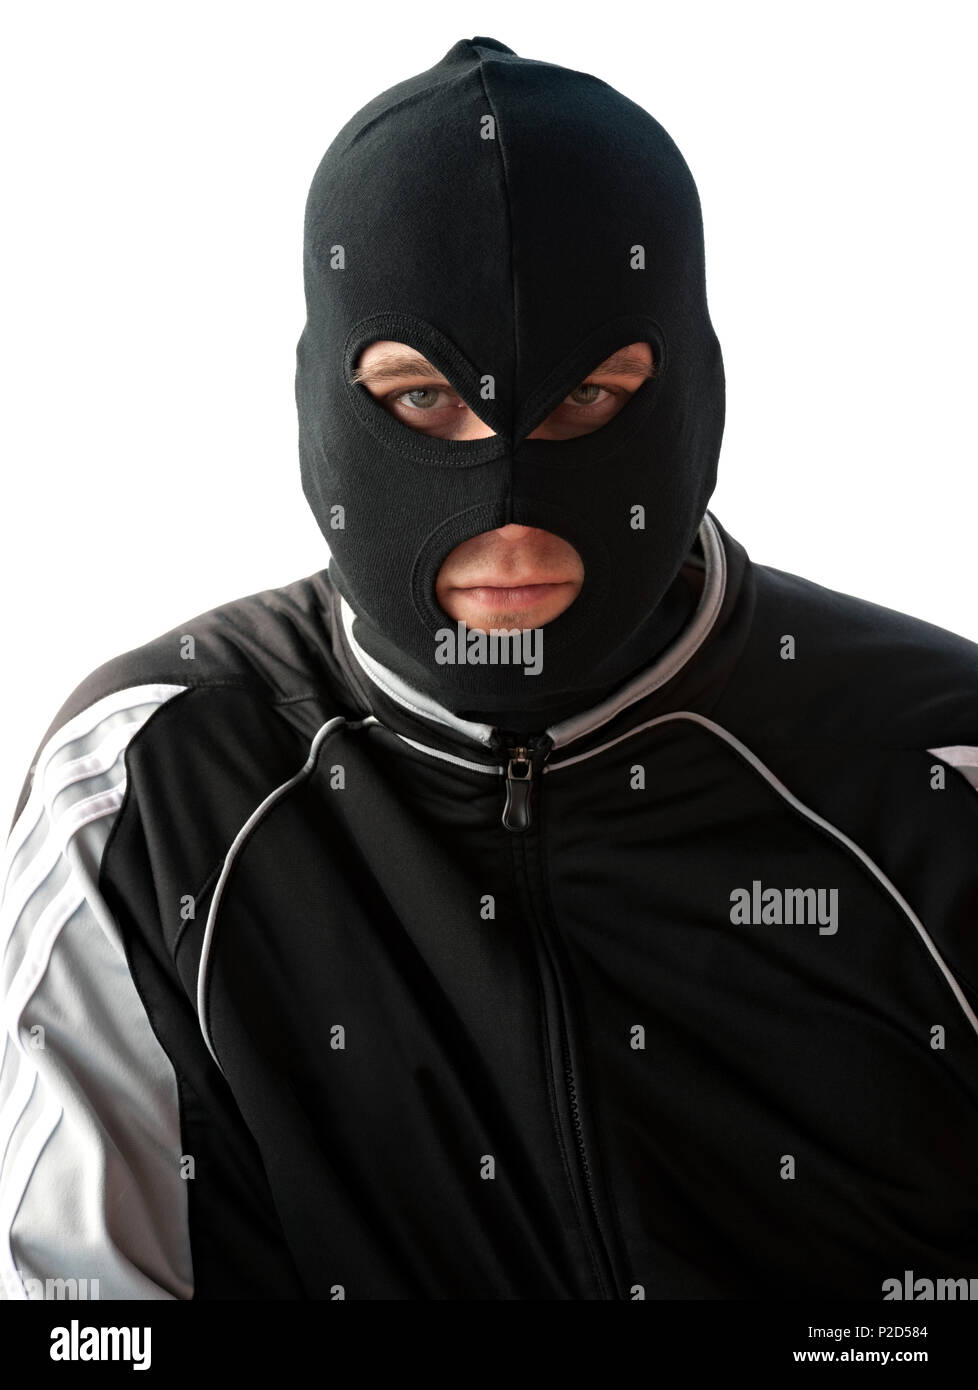 Verkeersopstopping Net zo zwavel Gangster in mask Stock Photo - Alamy